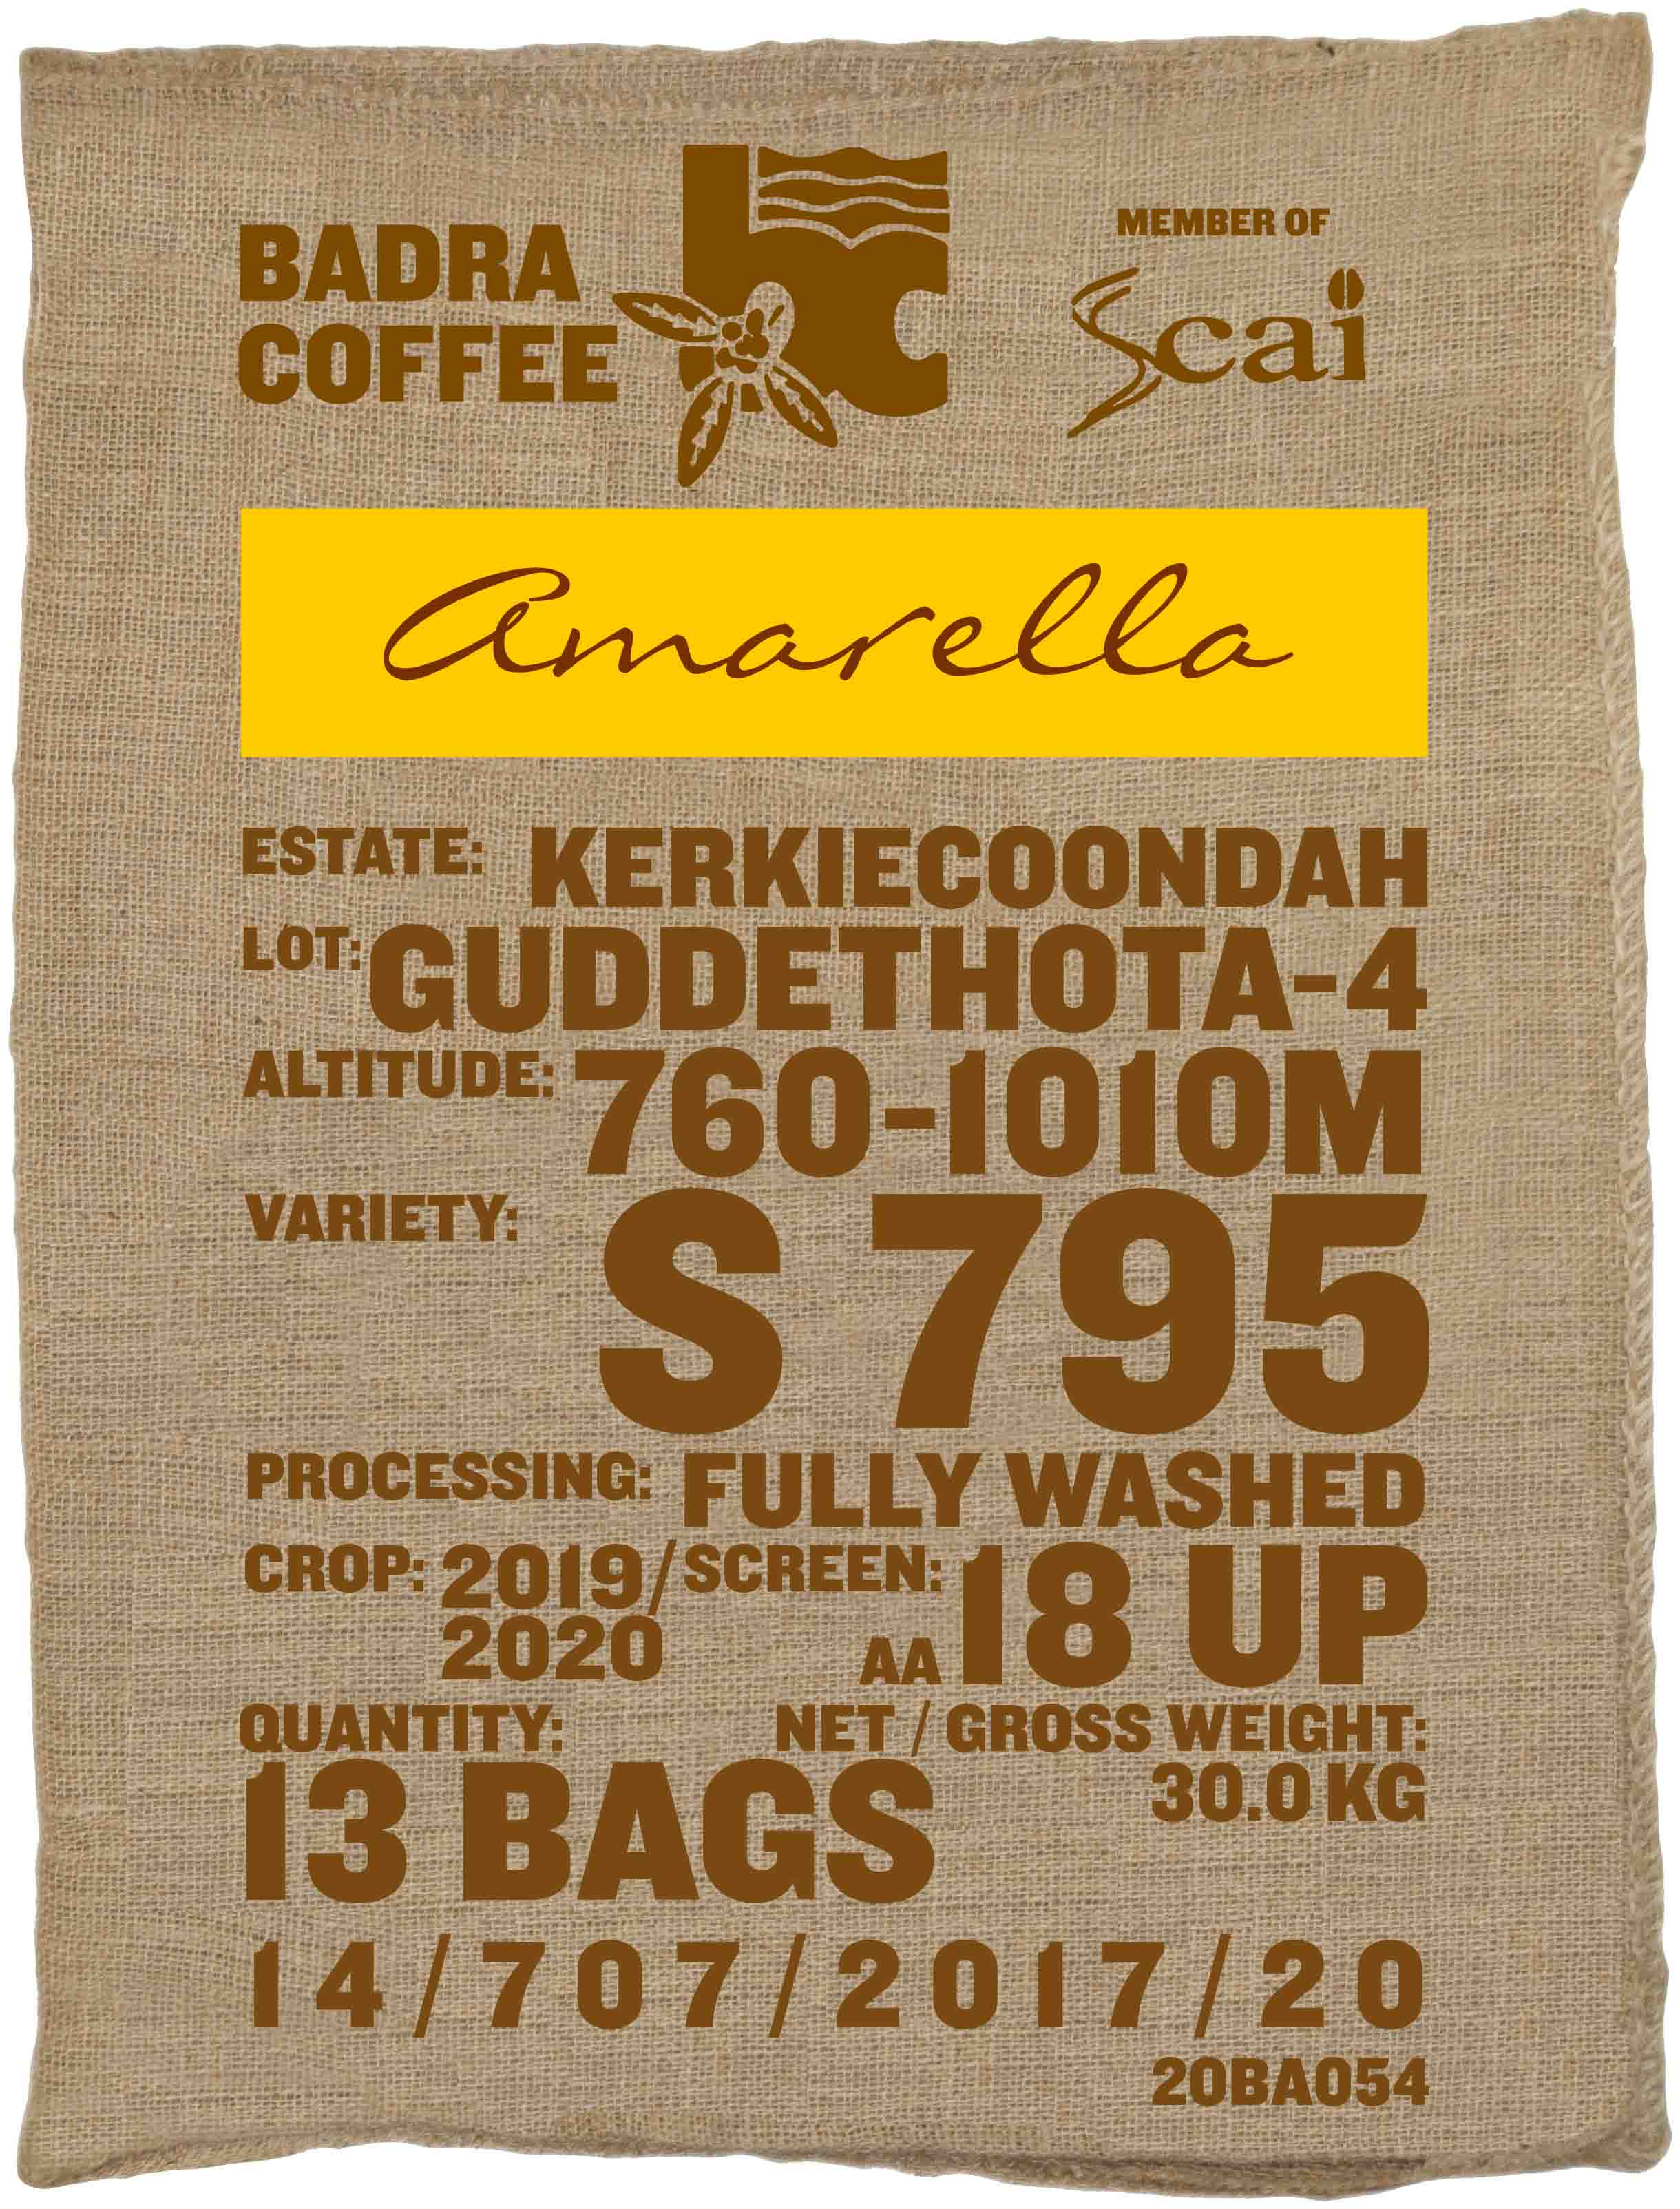 Ein Rohkaffeesack amarella Parzellenkaffee Varietät S795. Badra Estates Lot Guddethota 4.